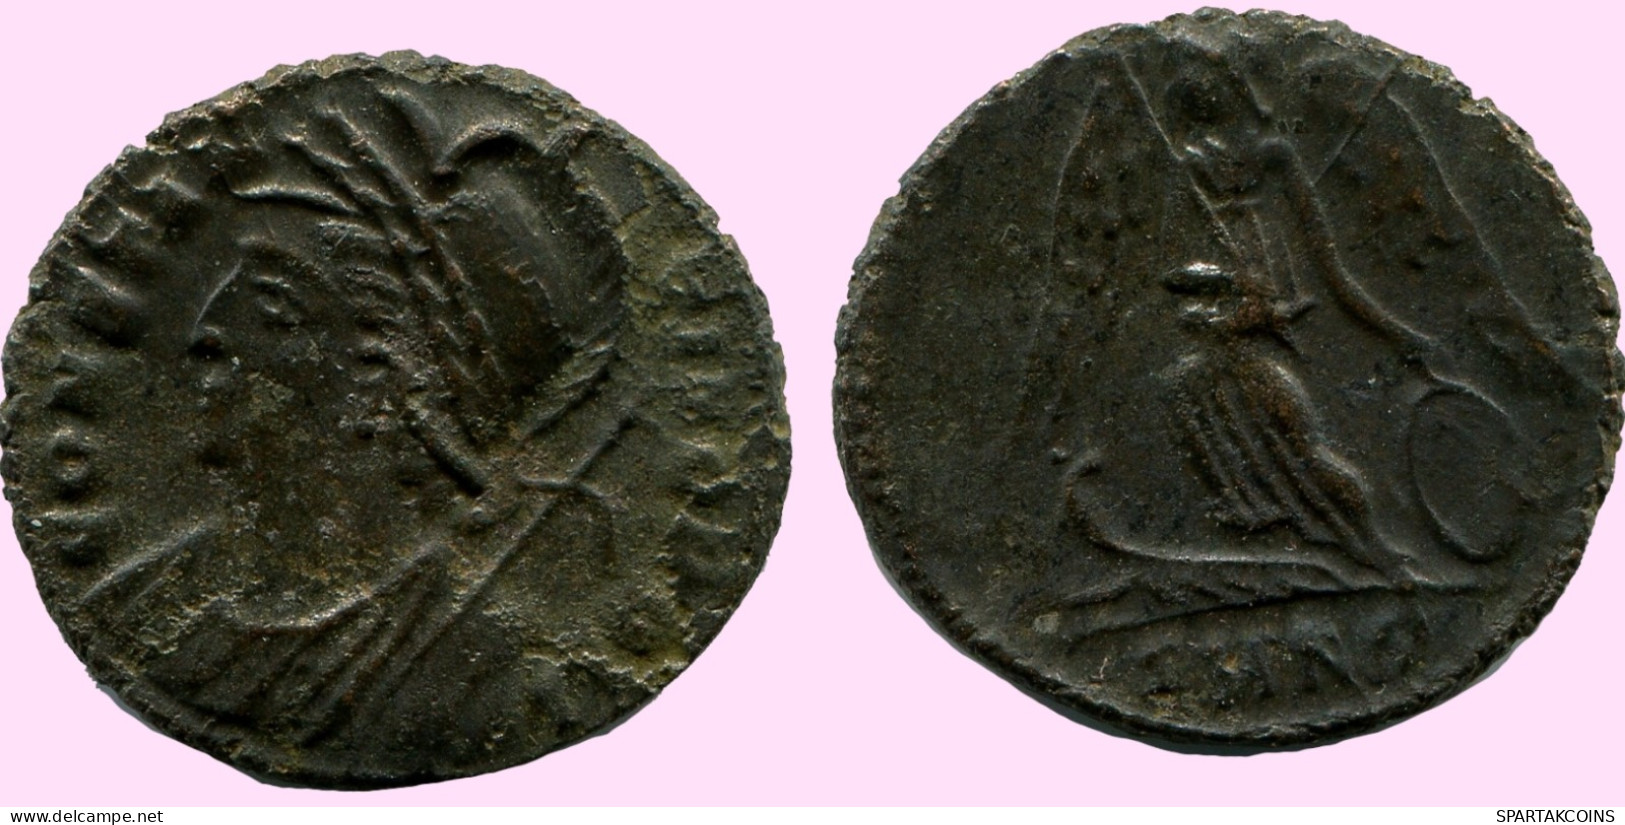 CONSTANTINUS I CONSTANTINOPOLI FOLLIS Ancient ROMAN Coin #ANC12083.25.U.A - The Christian Empire (307 AD To 363 AD)